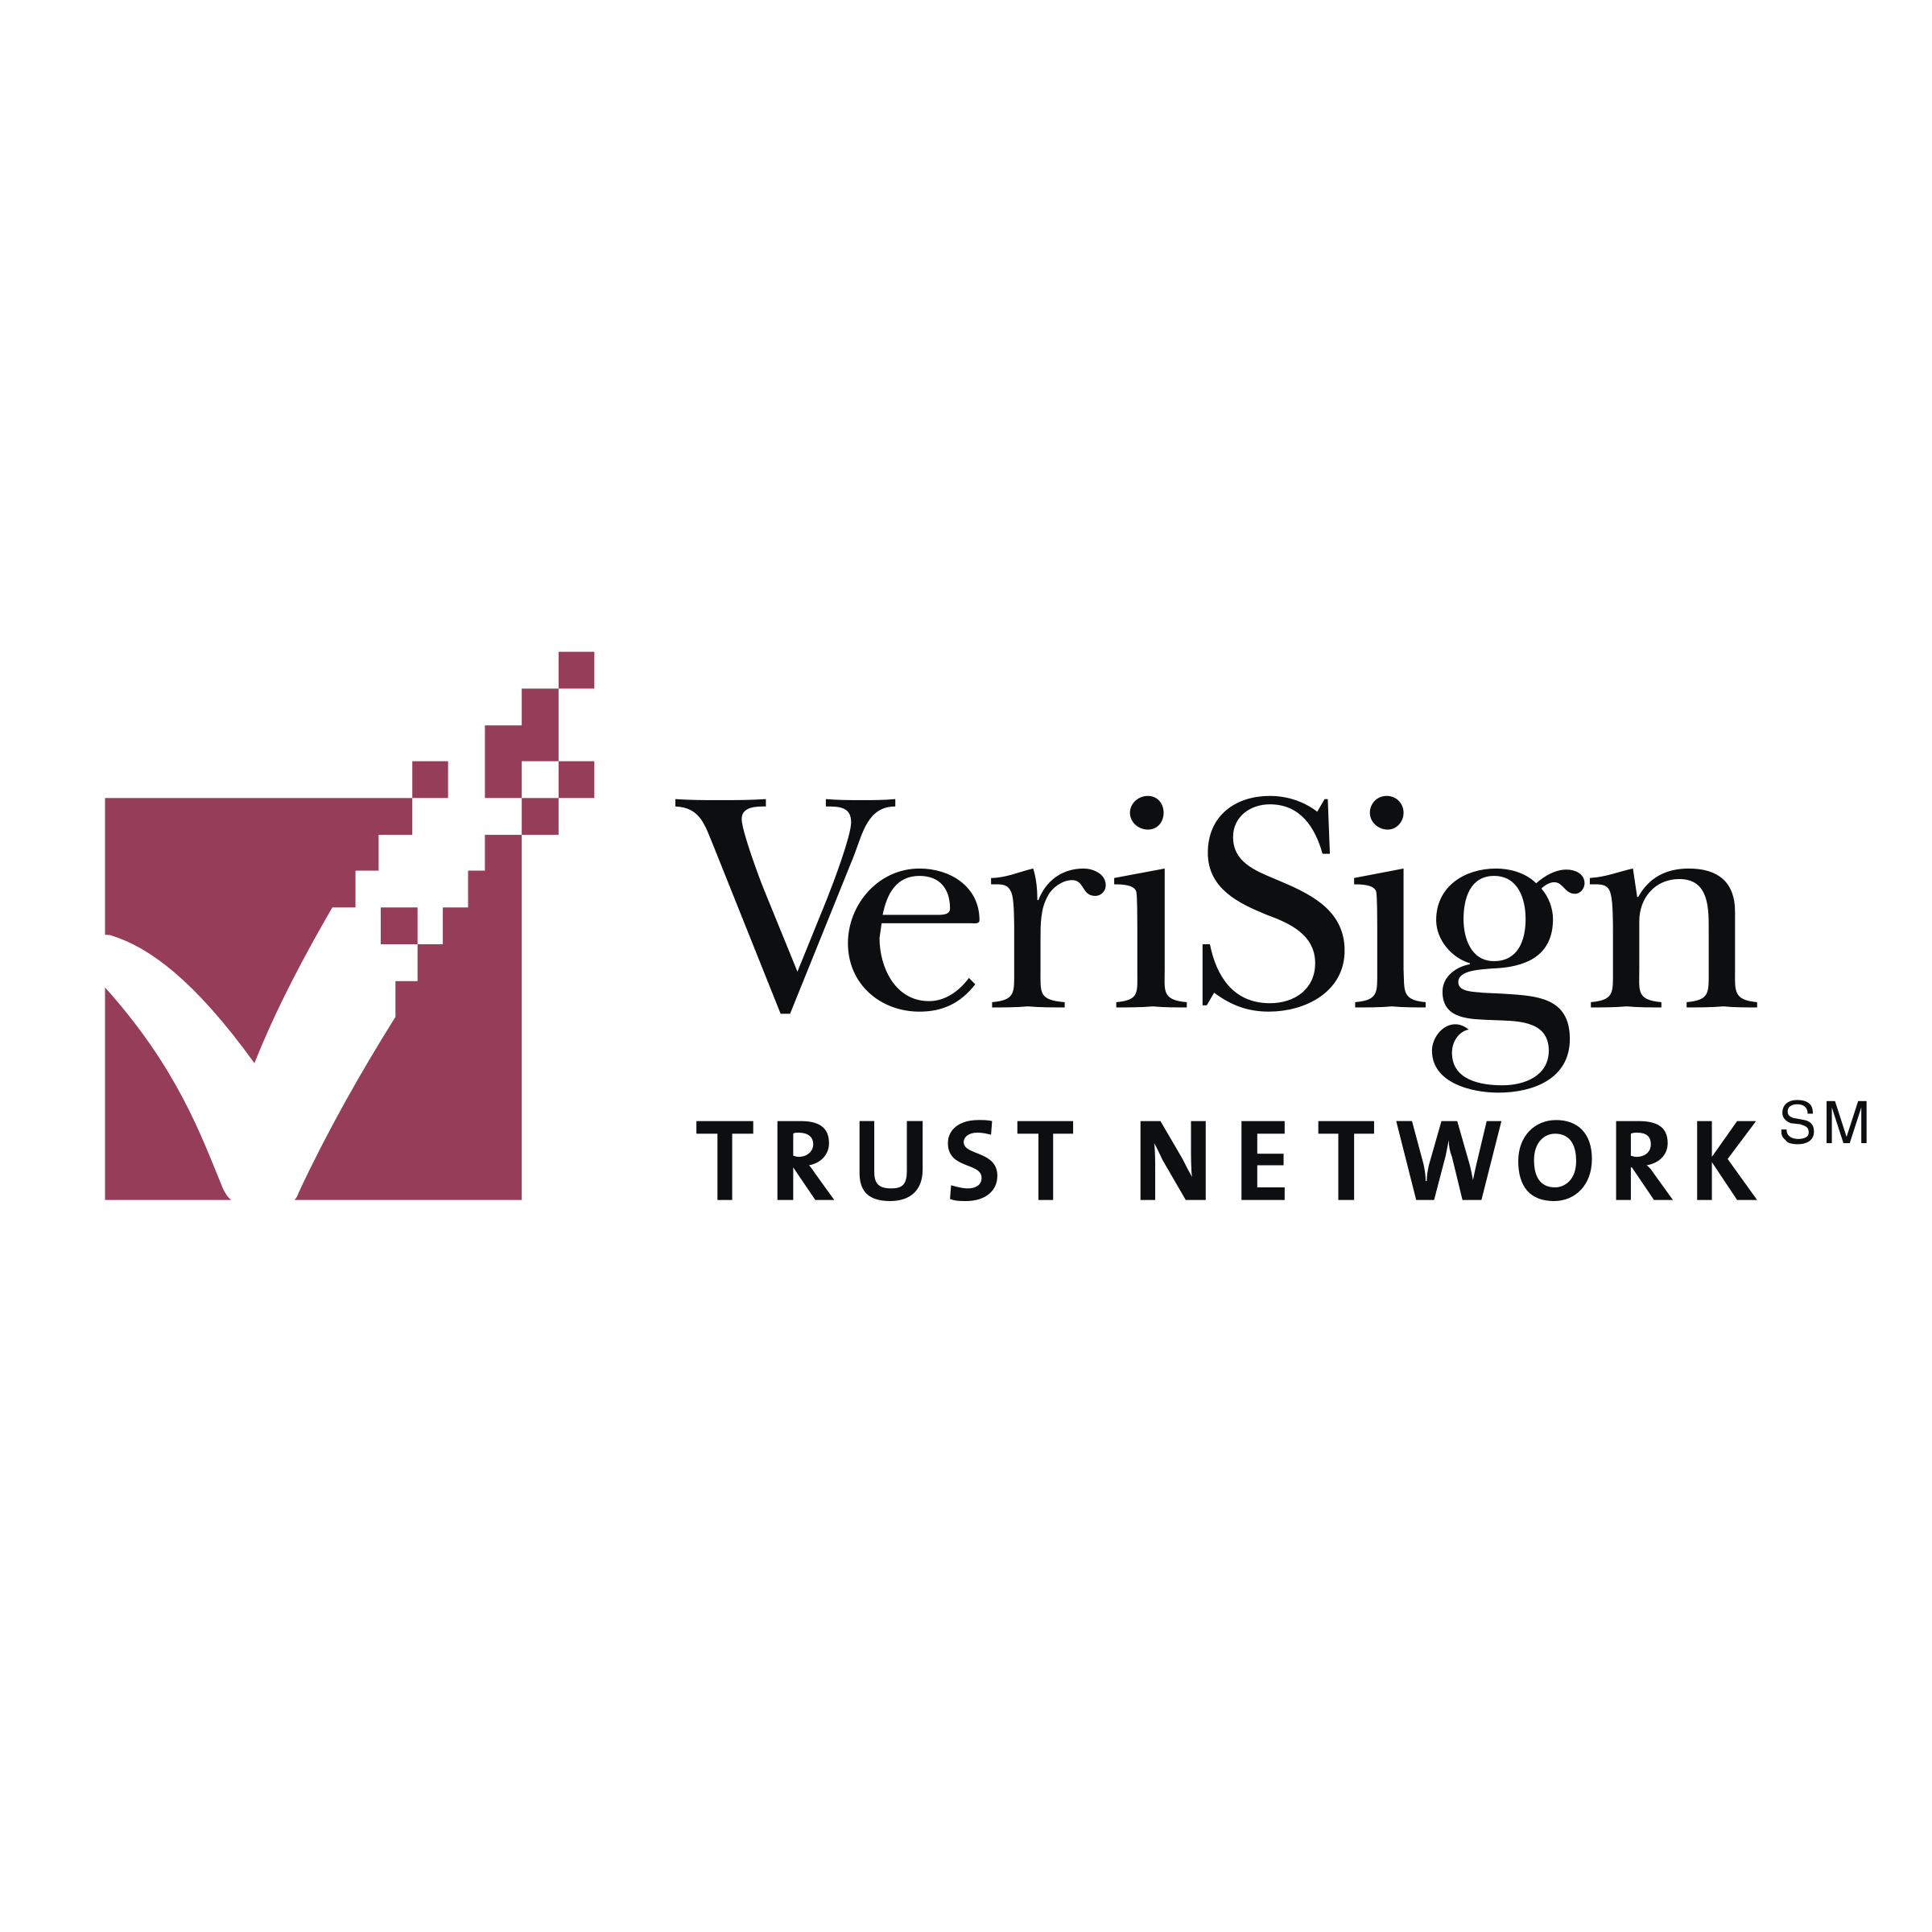 VeriSign Logo - VeriSign Logo PNG Transparent & SVG Vector